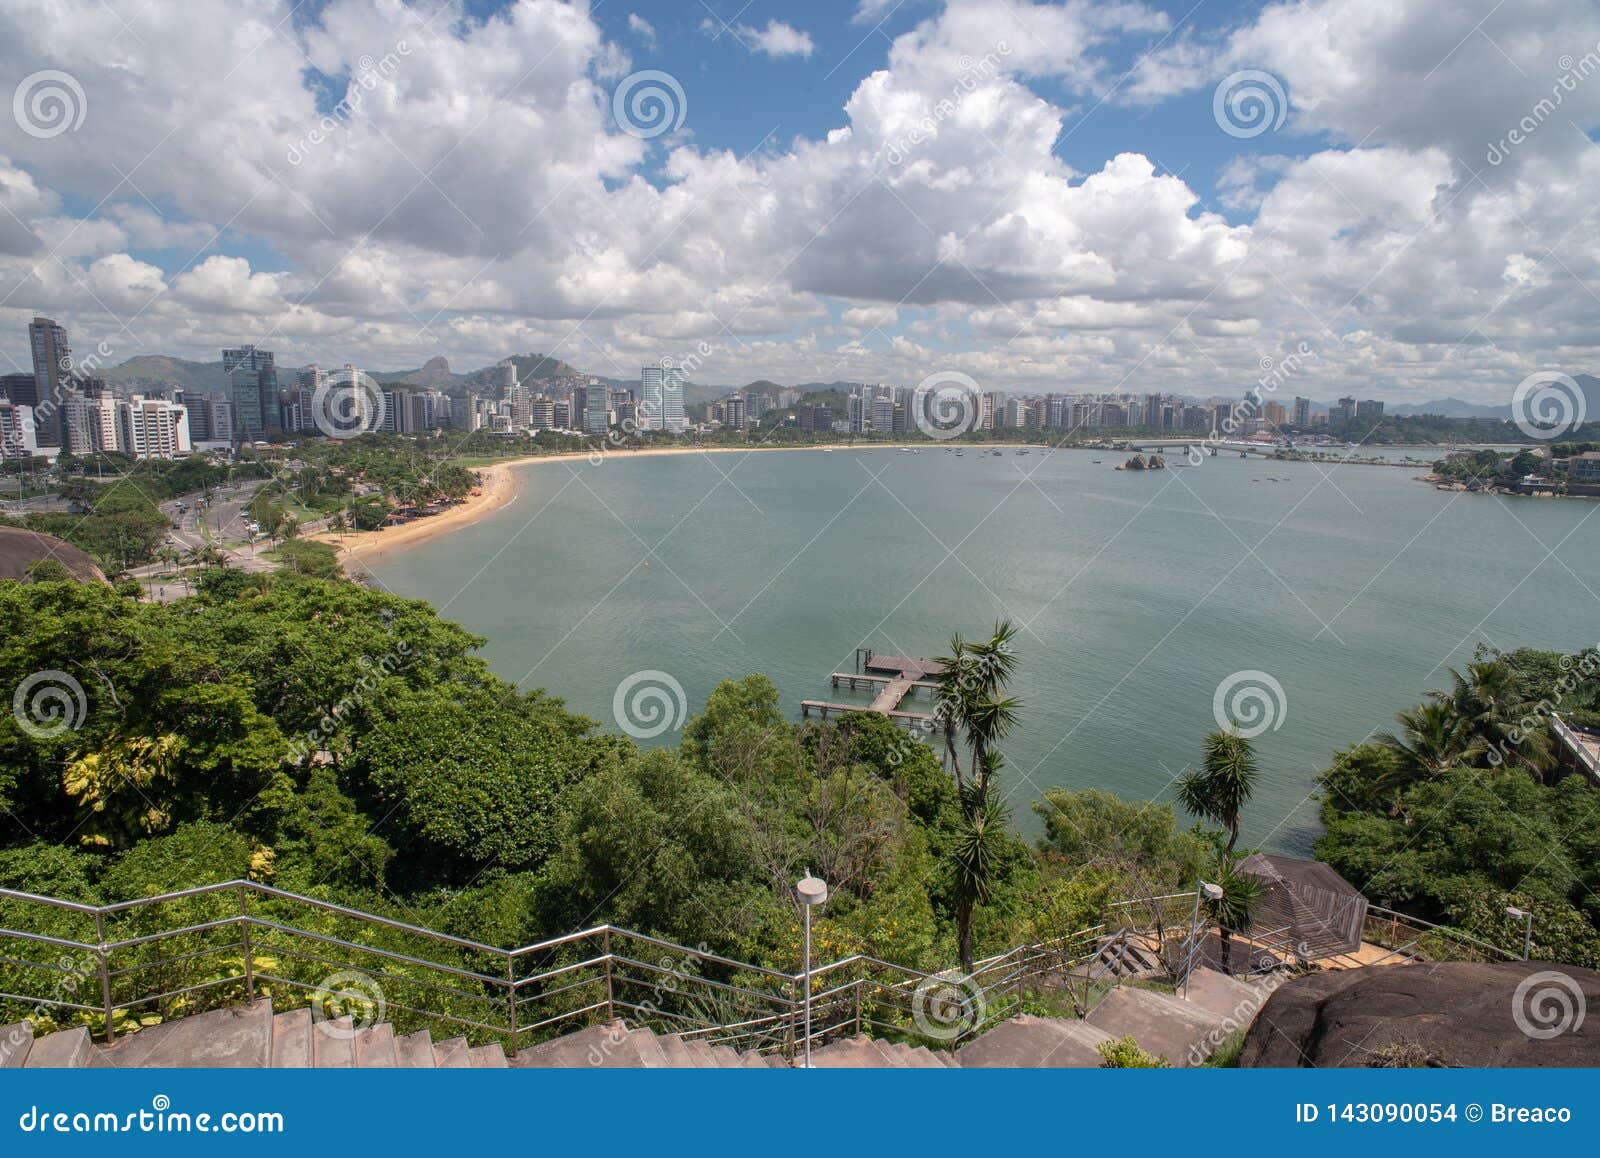 praia do canto vitoria brazil hotel senac holidays pier sol beach